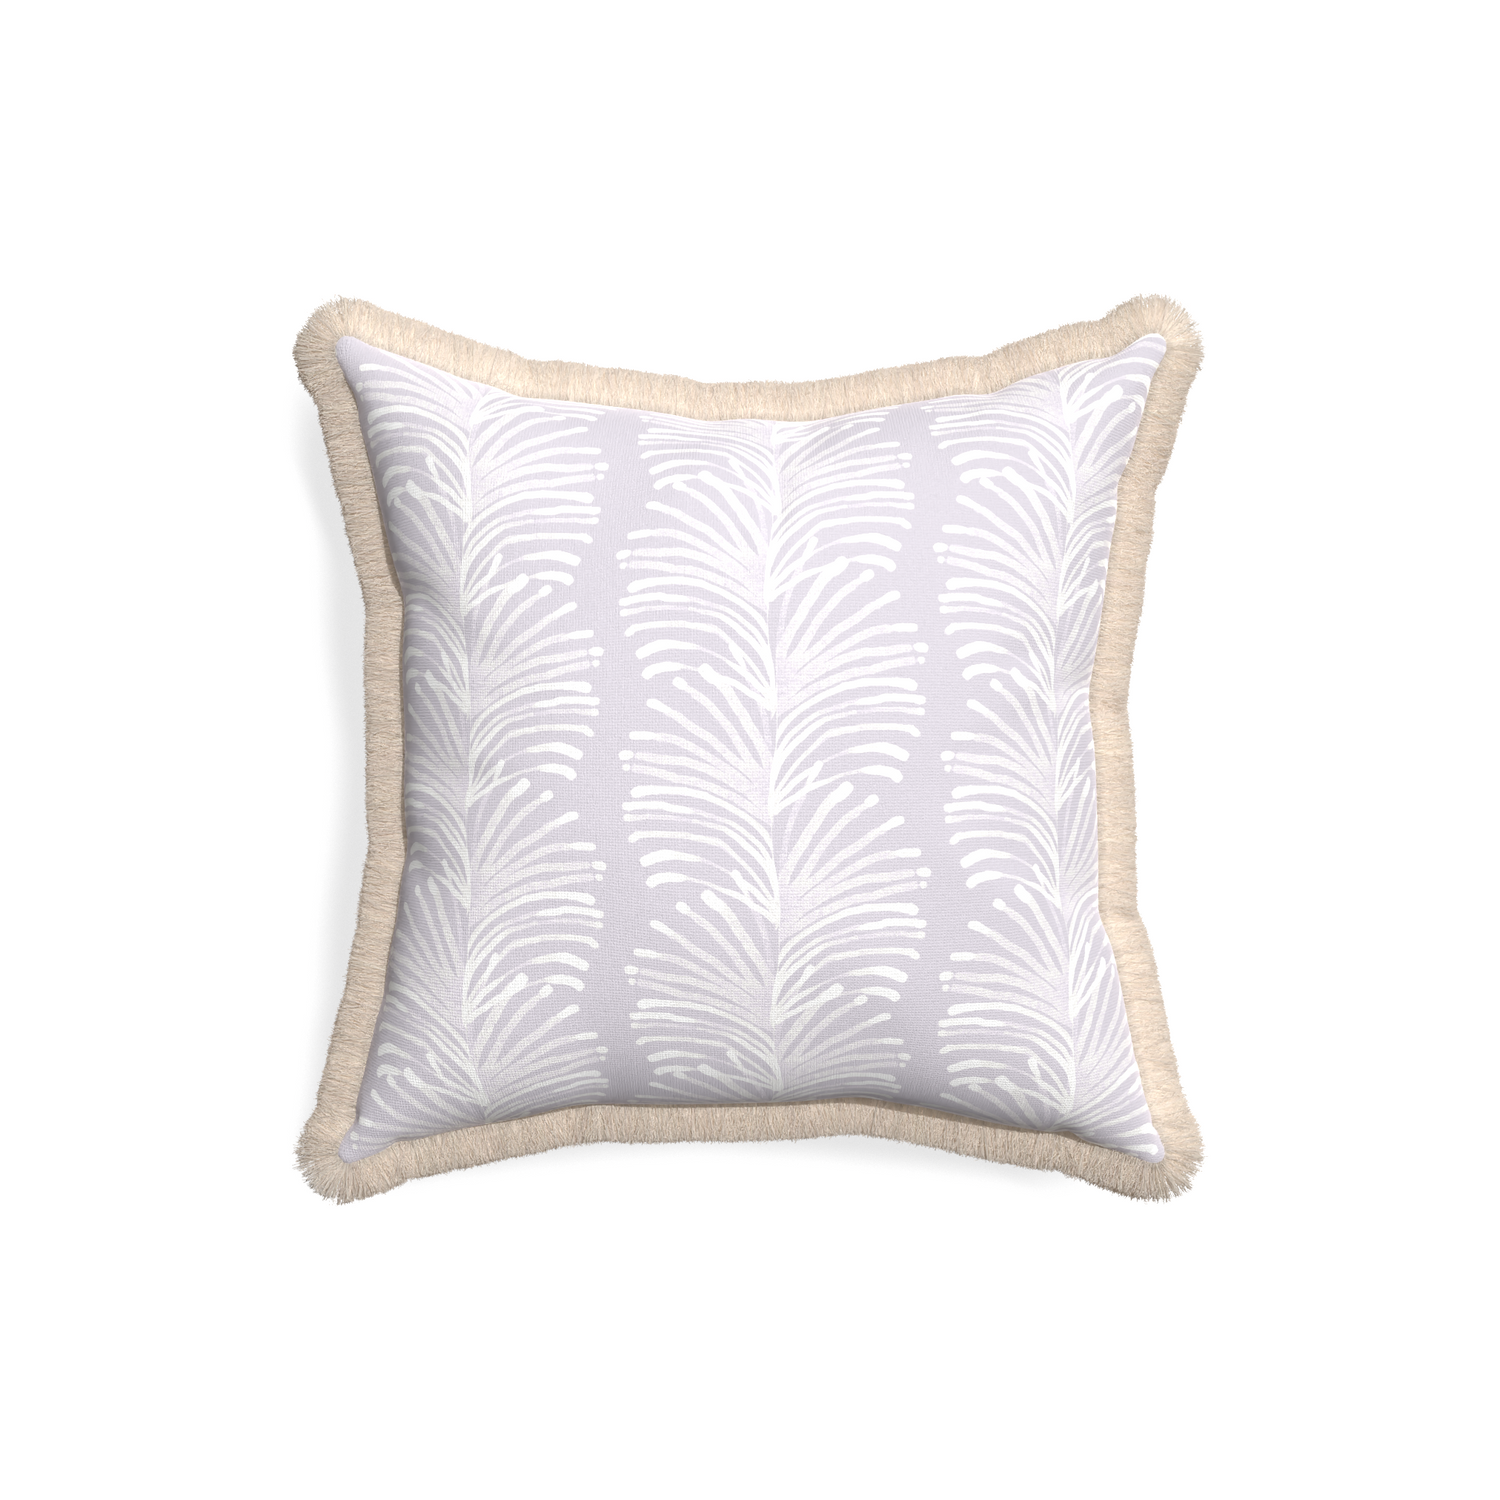 18-square emma lavender custom pillow with cream fringe on white background